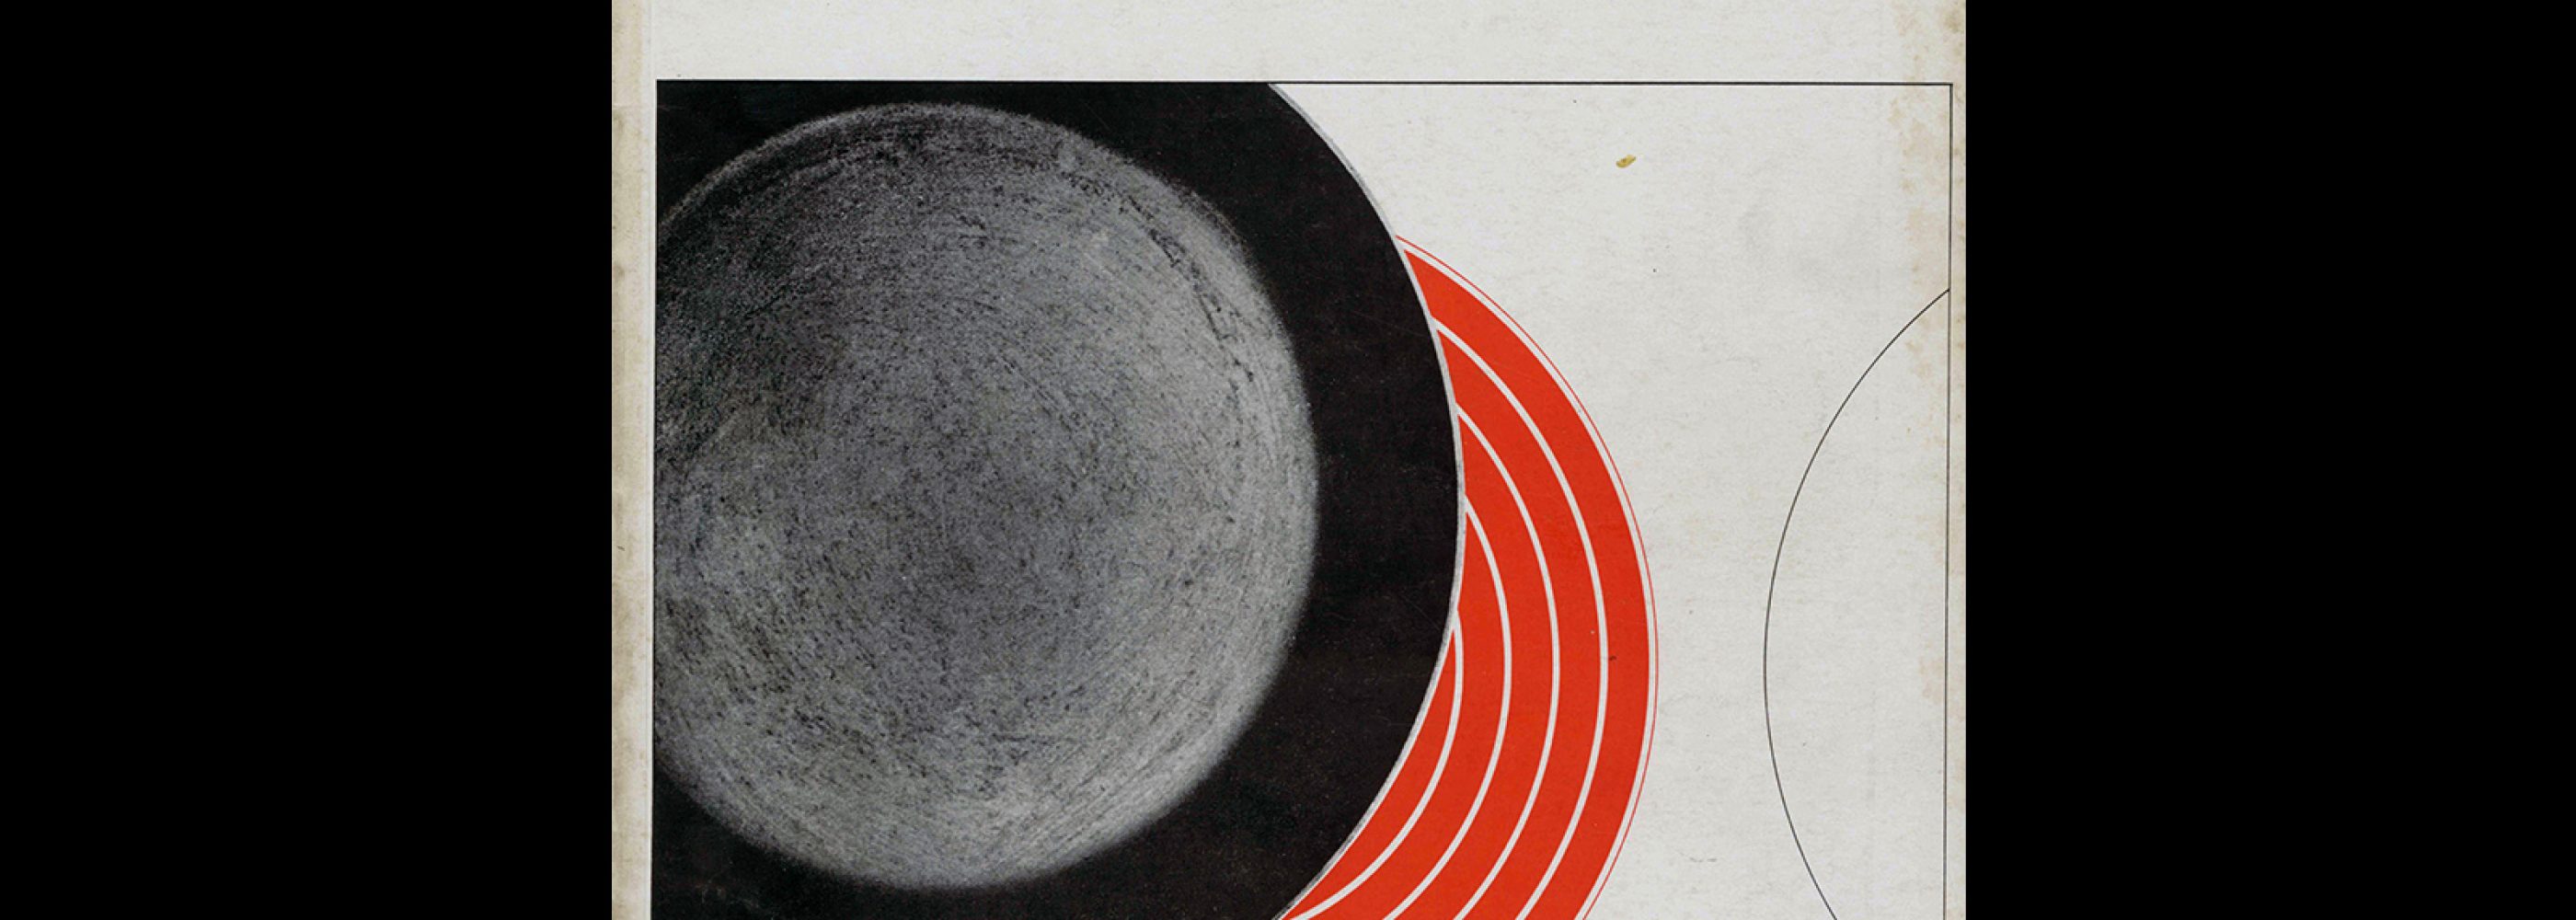 Design, Council of Industrial Design, 196, April 1965. Cover design by Dennis Bailey